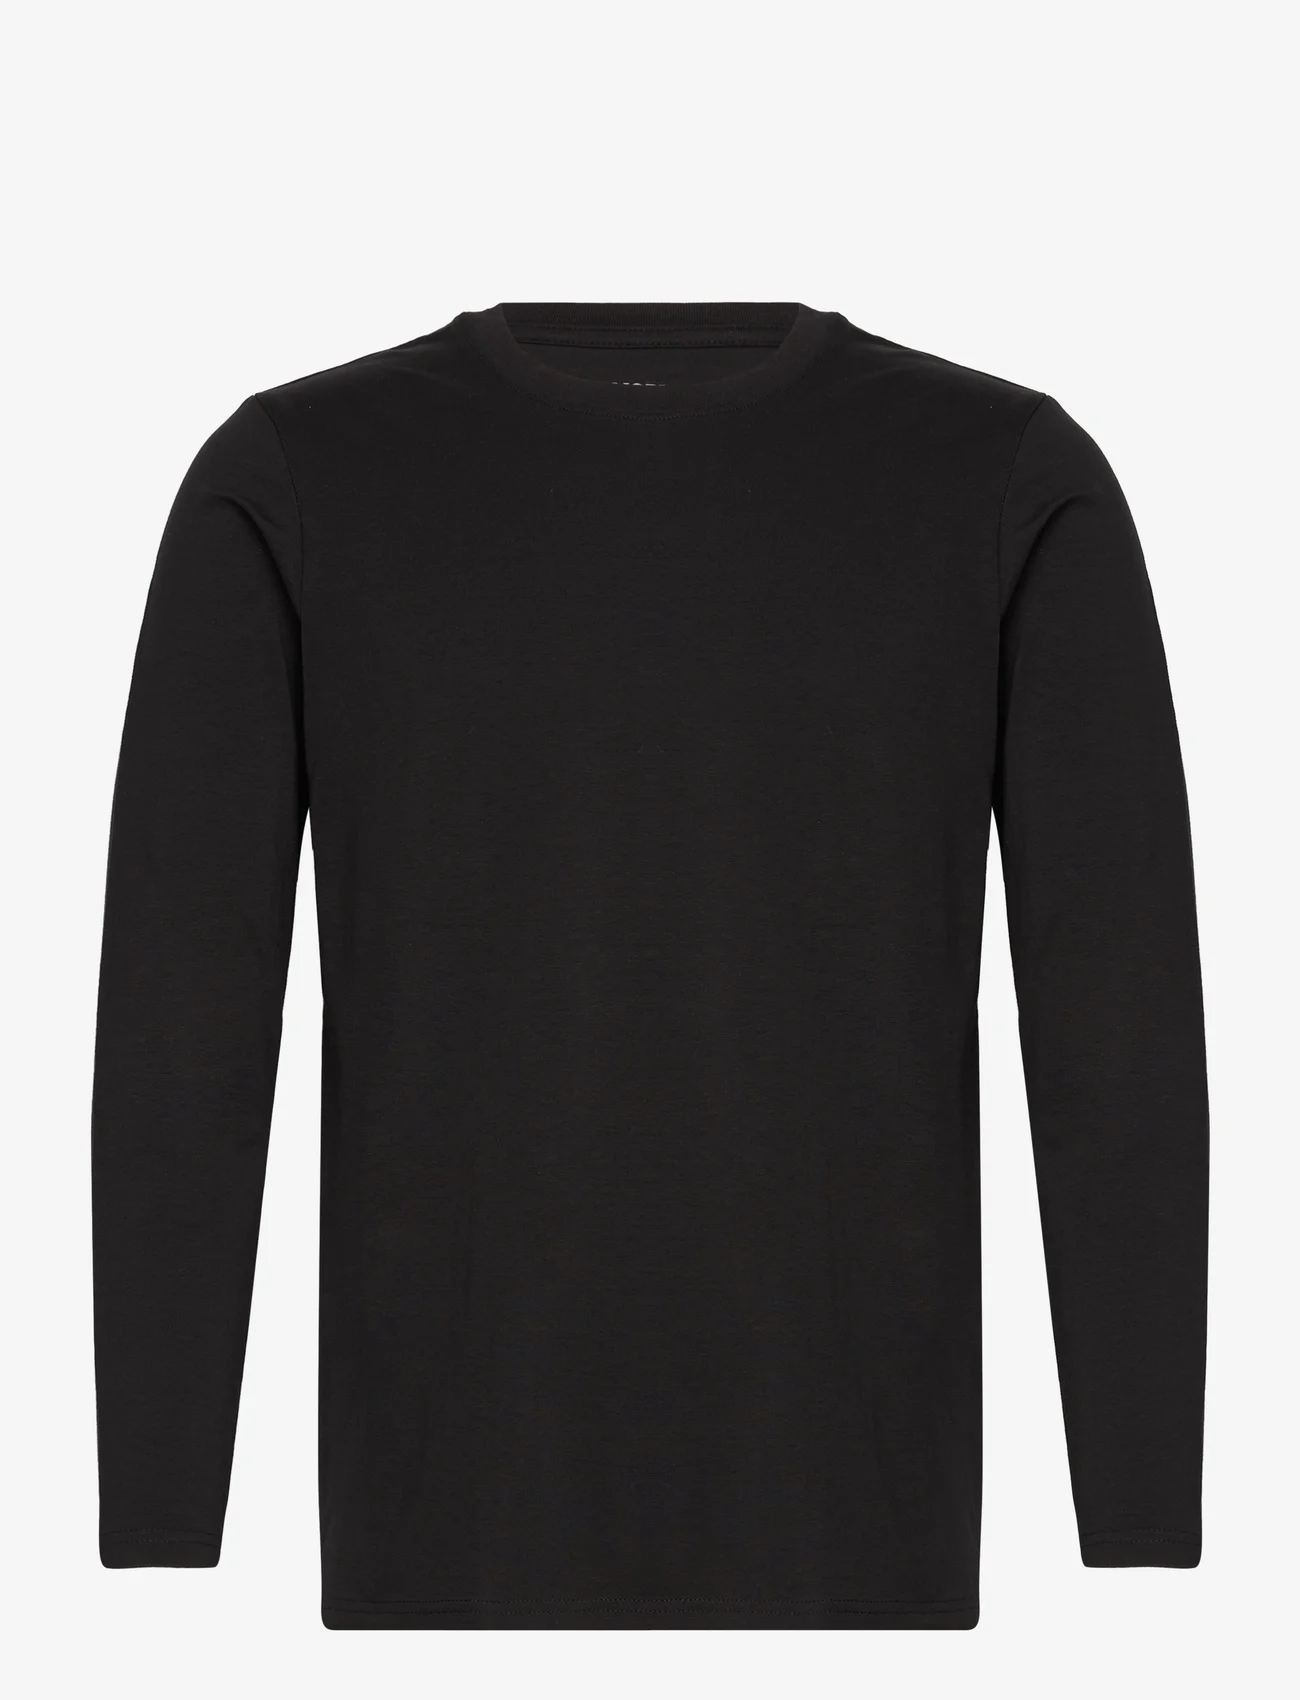 NORVIG - Men's O-neck L/S T-shirt, Cotton/Stretch - lägsta priserna - black - 0